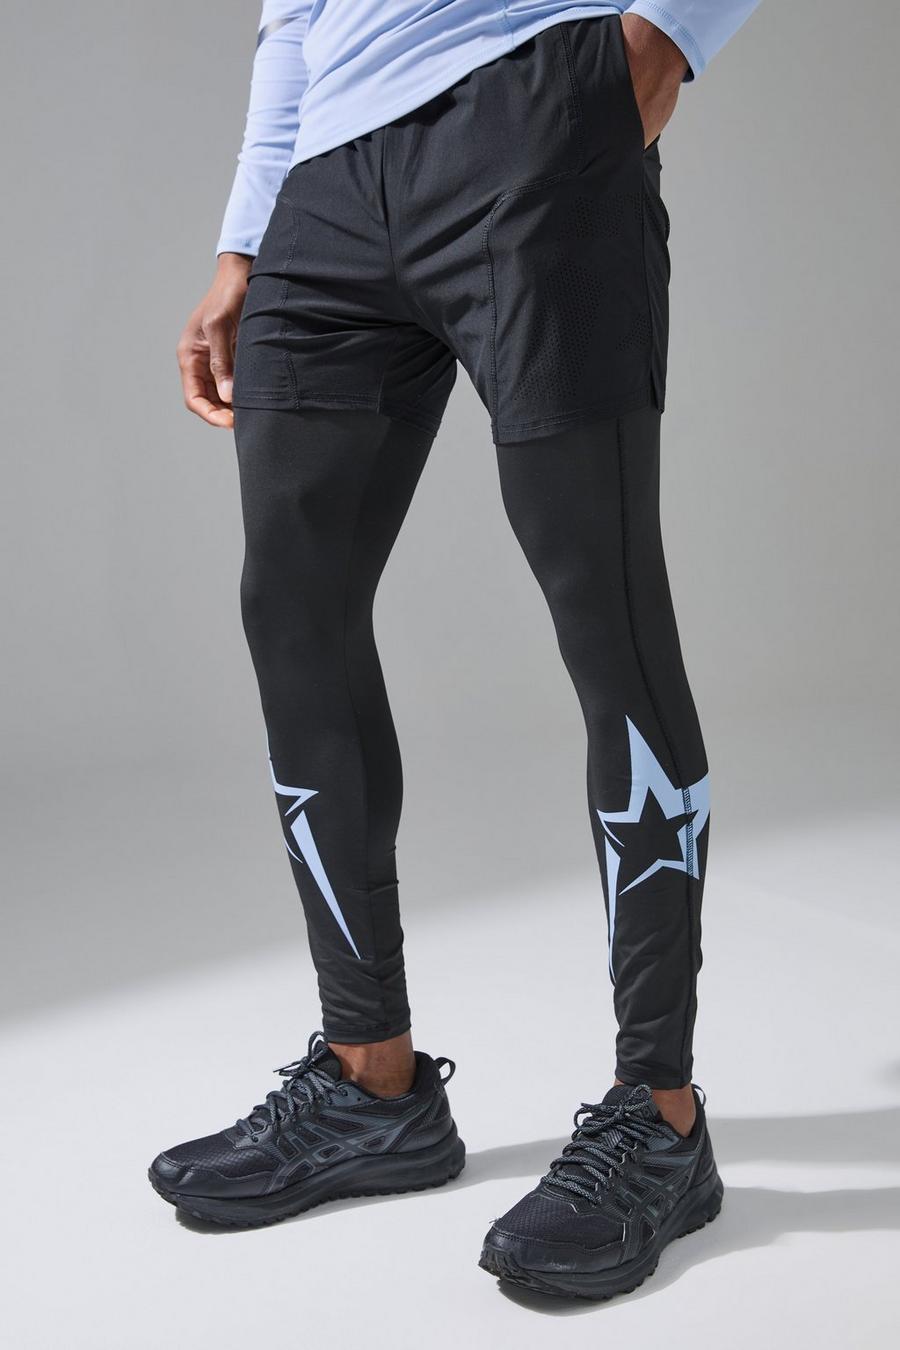 Gunna Active 5 Inch Stretch Shorts, Black